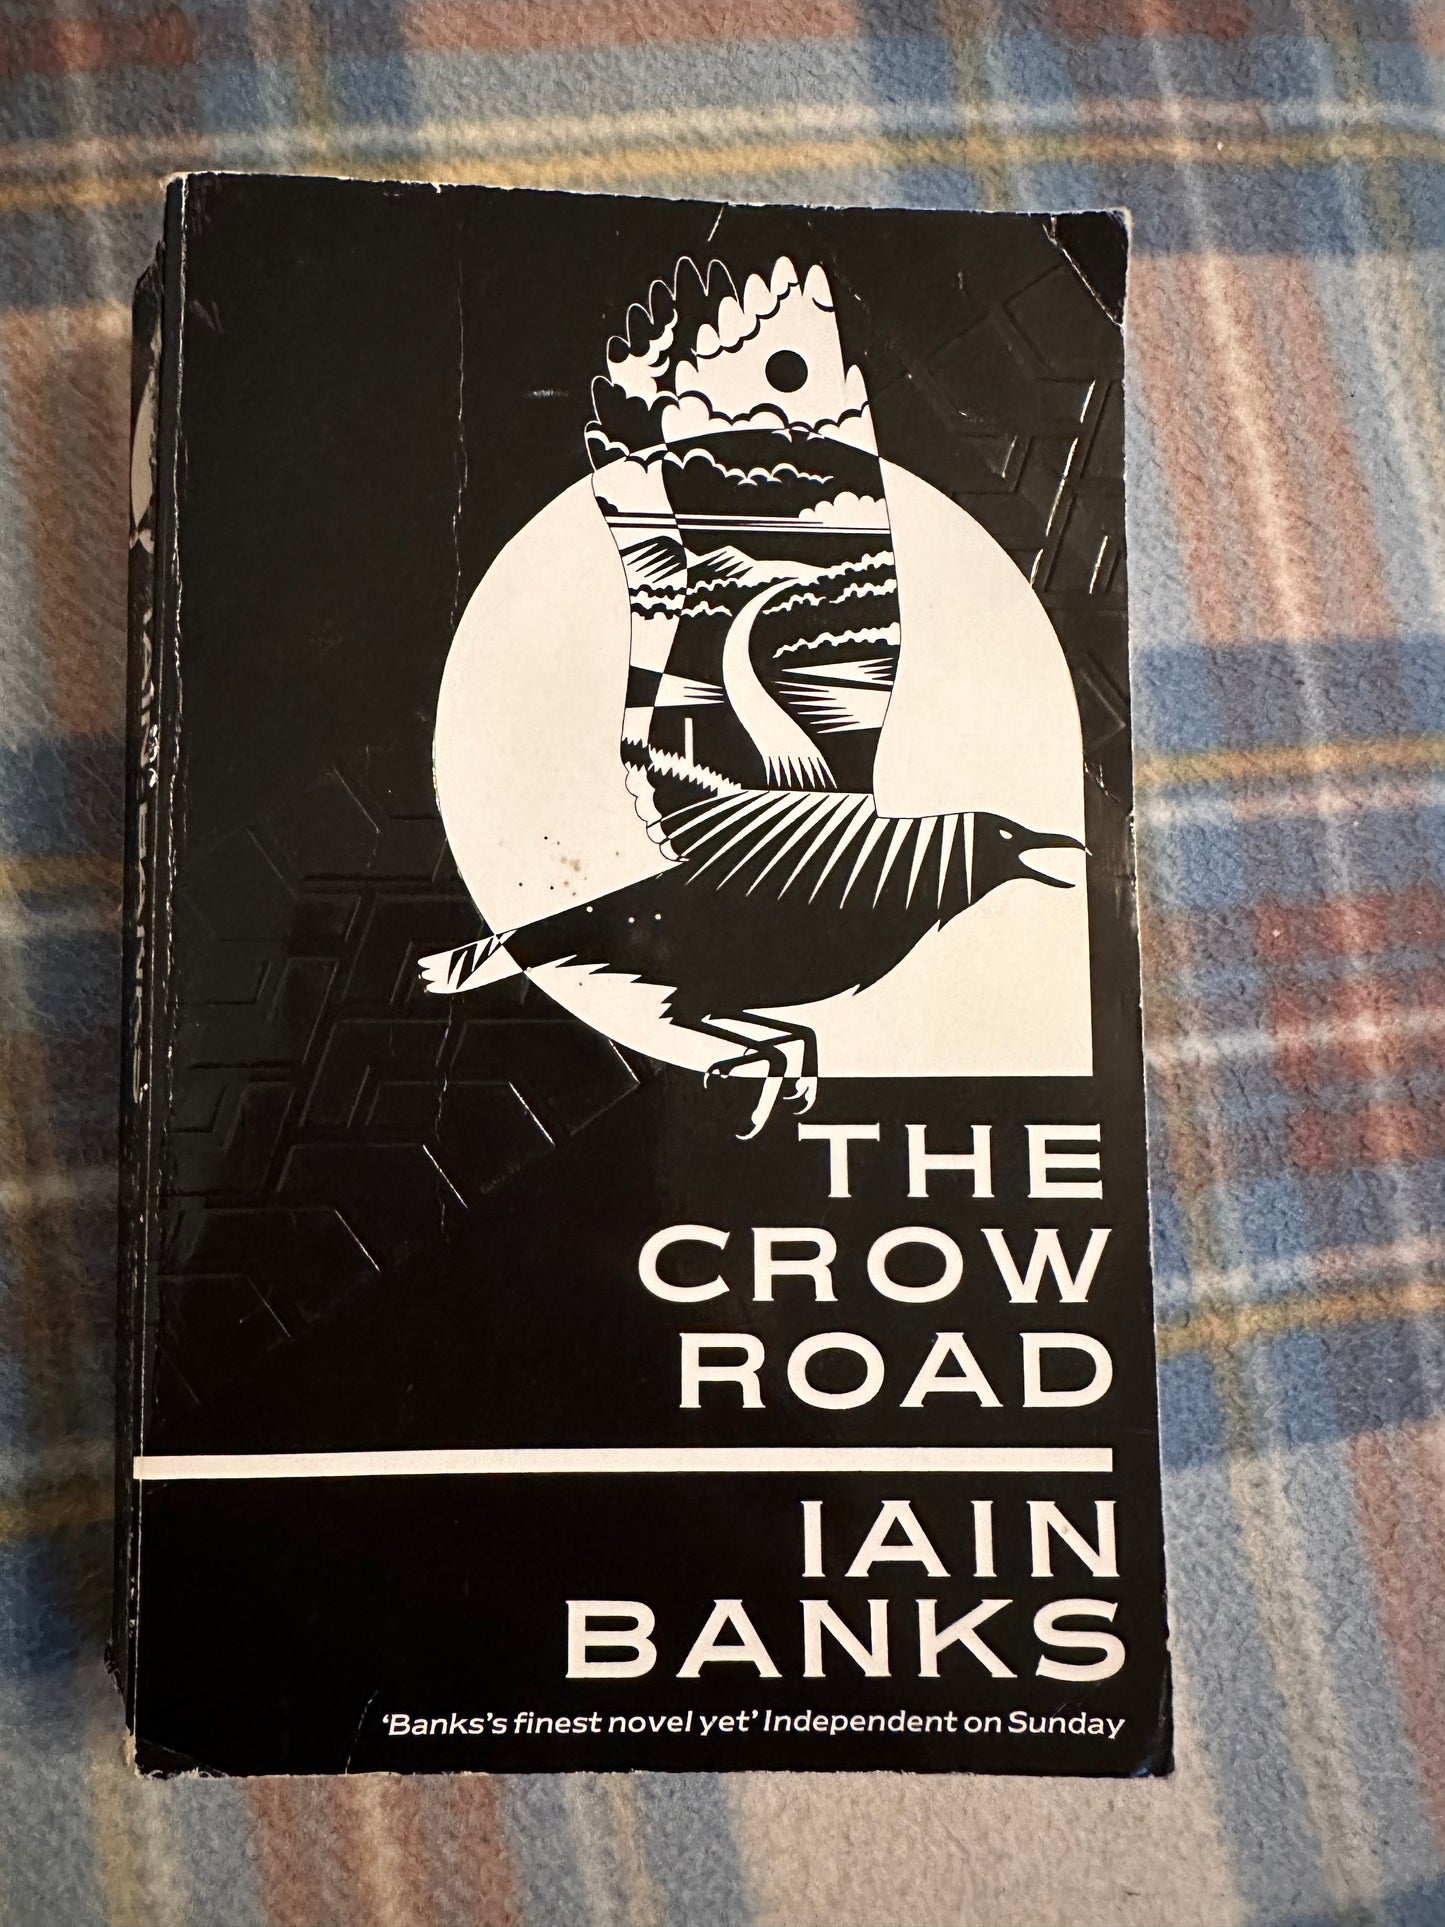 1998 The Crow Road - Iain Banks(Abacus)